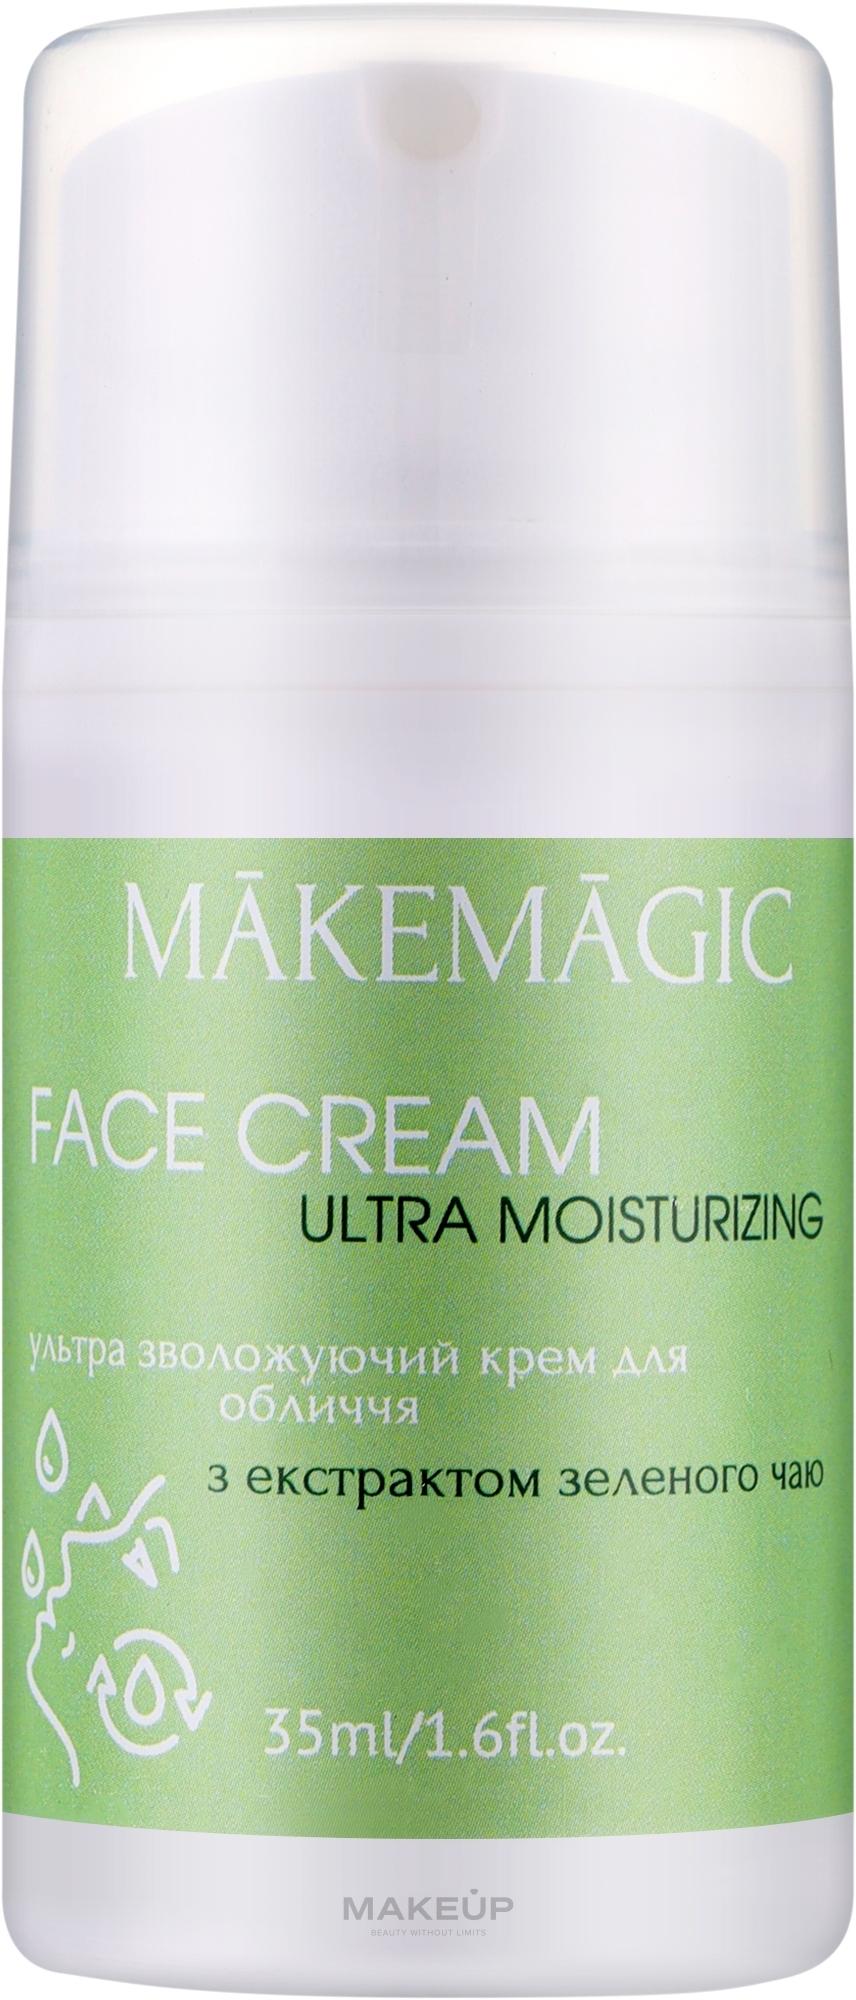 Ультразволожуючий крем для обличчя з экстрактом зеленого чая - Makemagic — фото 35ml